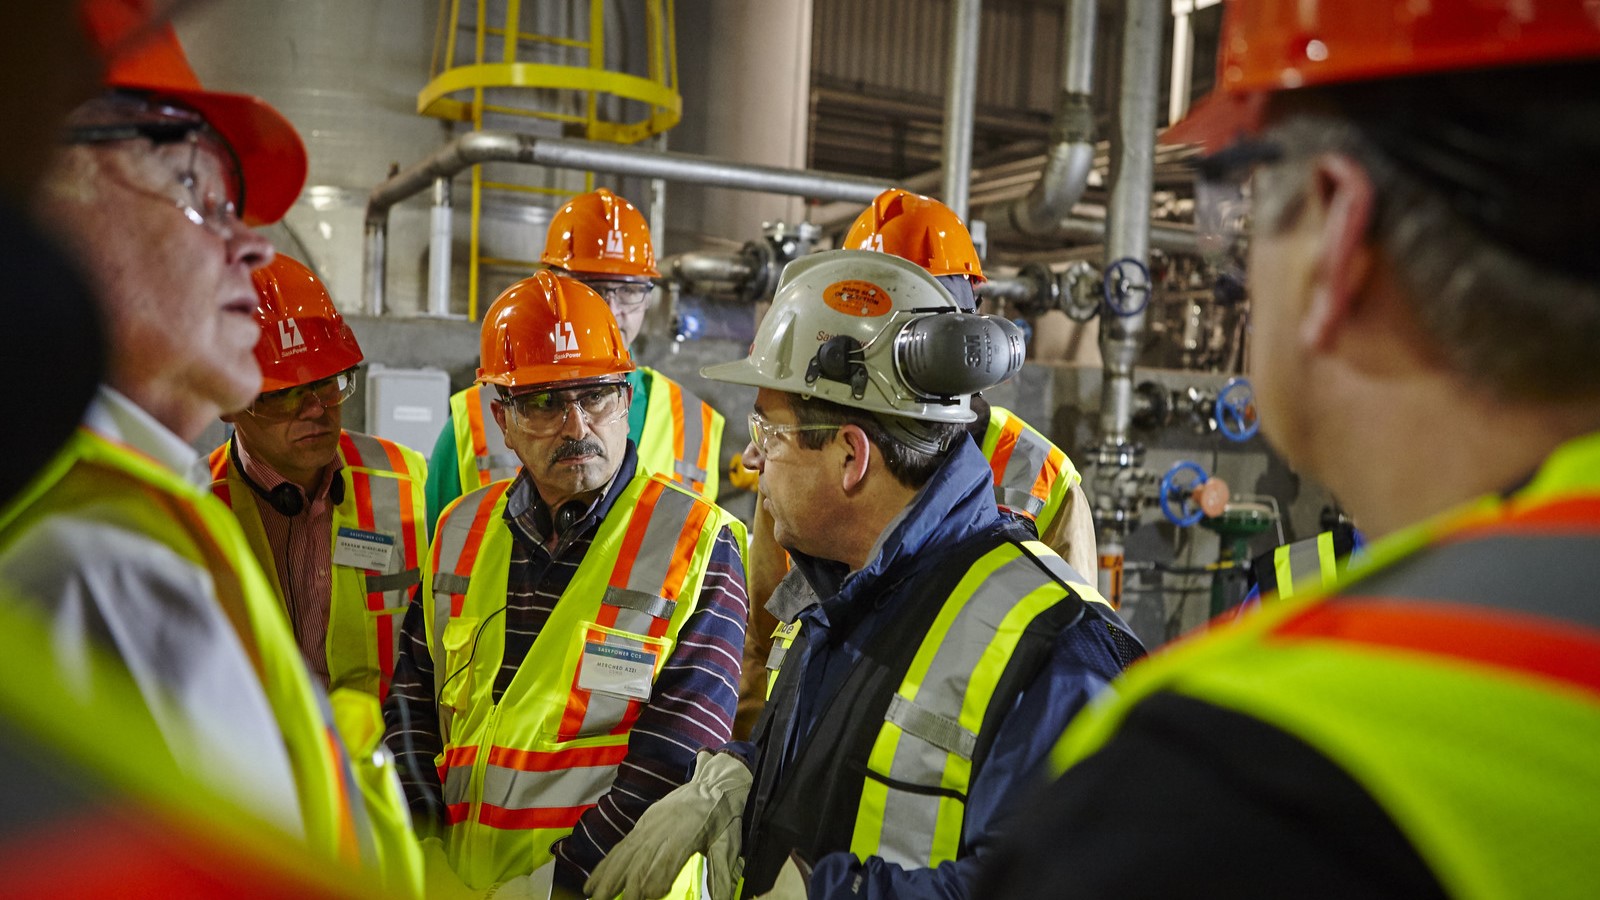 Men in safety vests and hard hats huddled together at a carbon capture facility.